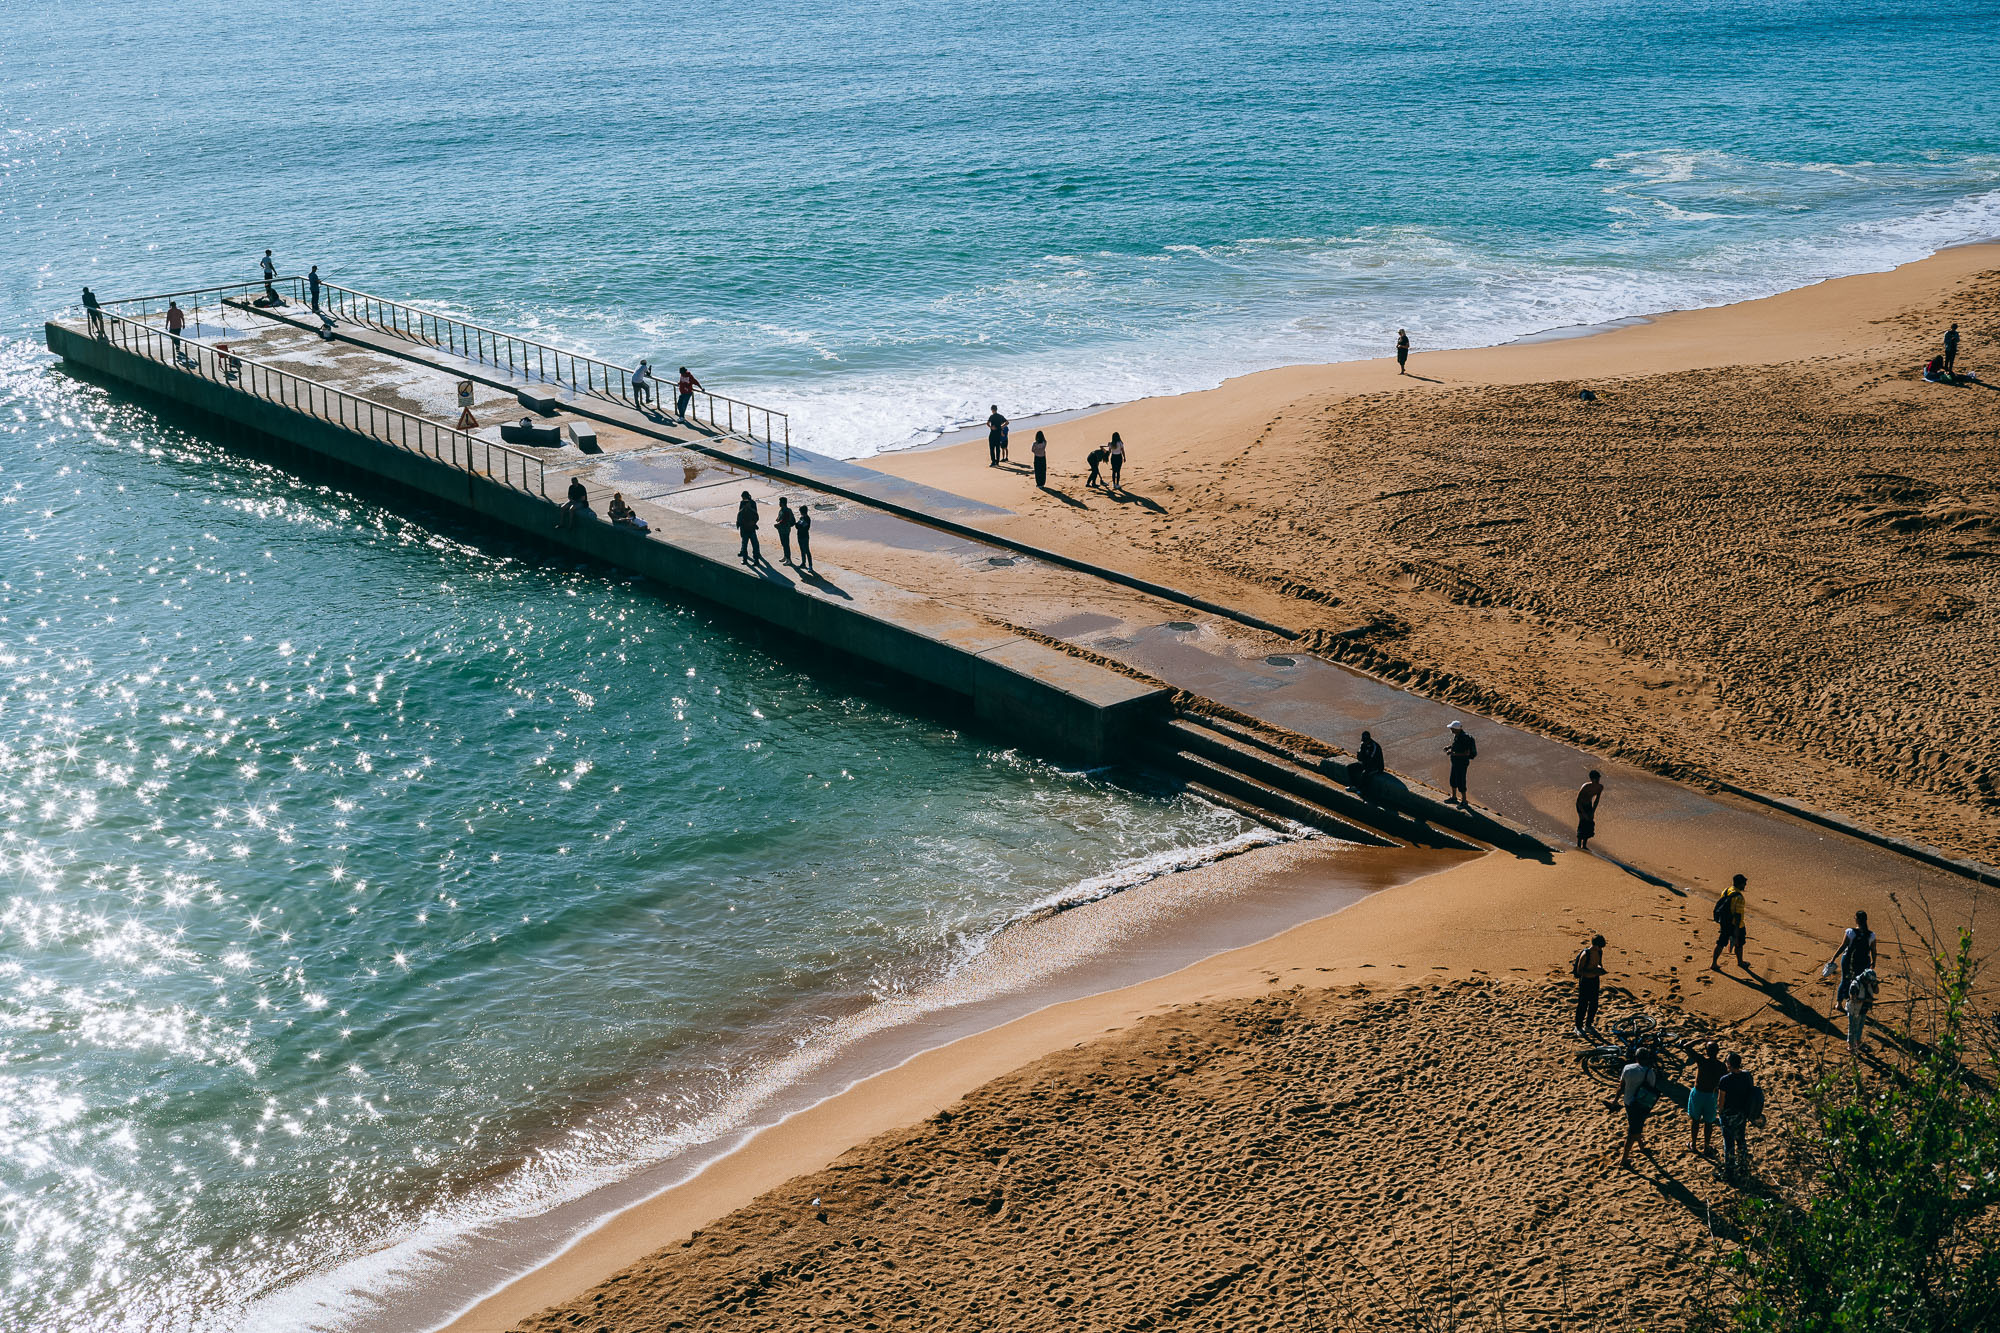 albufeira beach pier with vivid colour and high contrast